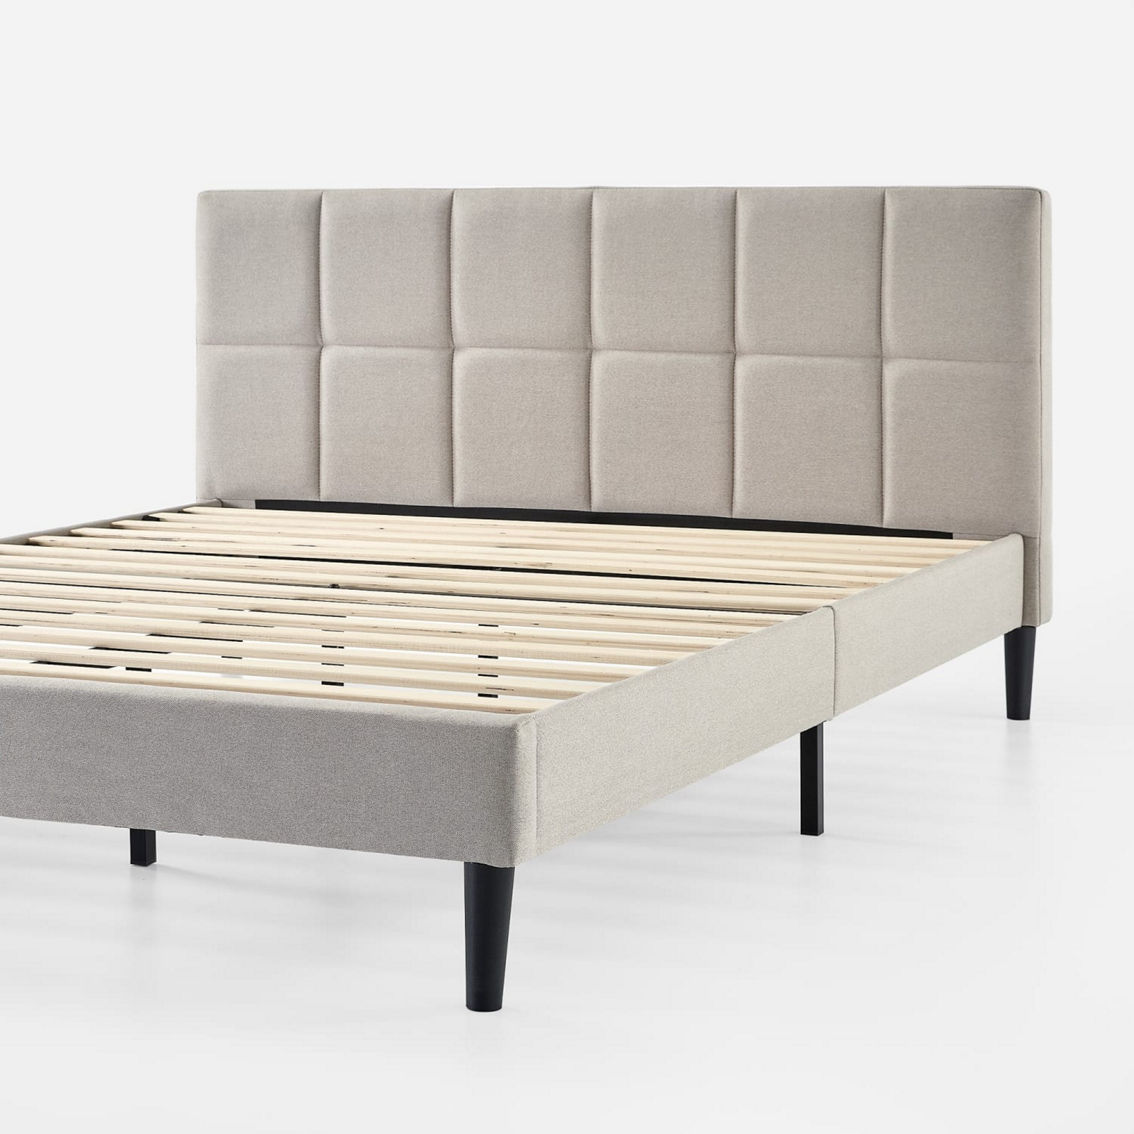 Zinus Upholstered Platform Bed with Short Headboard, Beige - Image 3 of 3